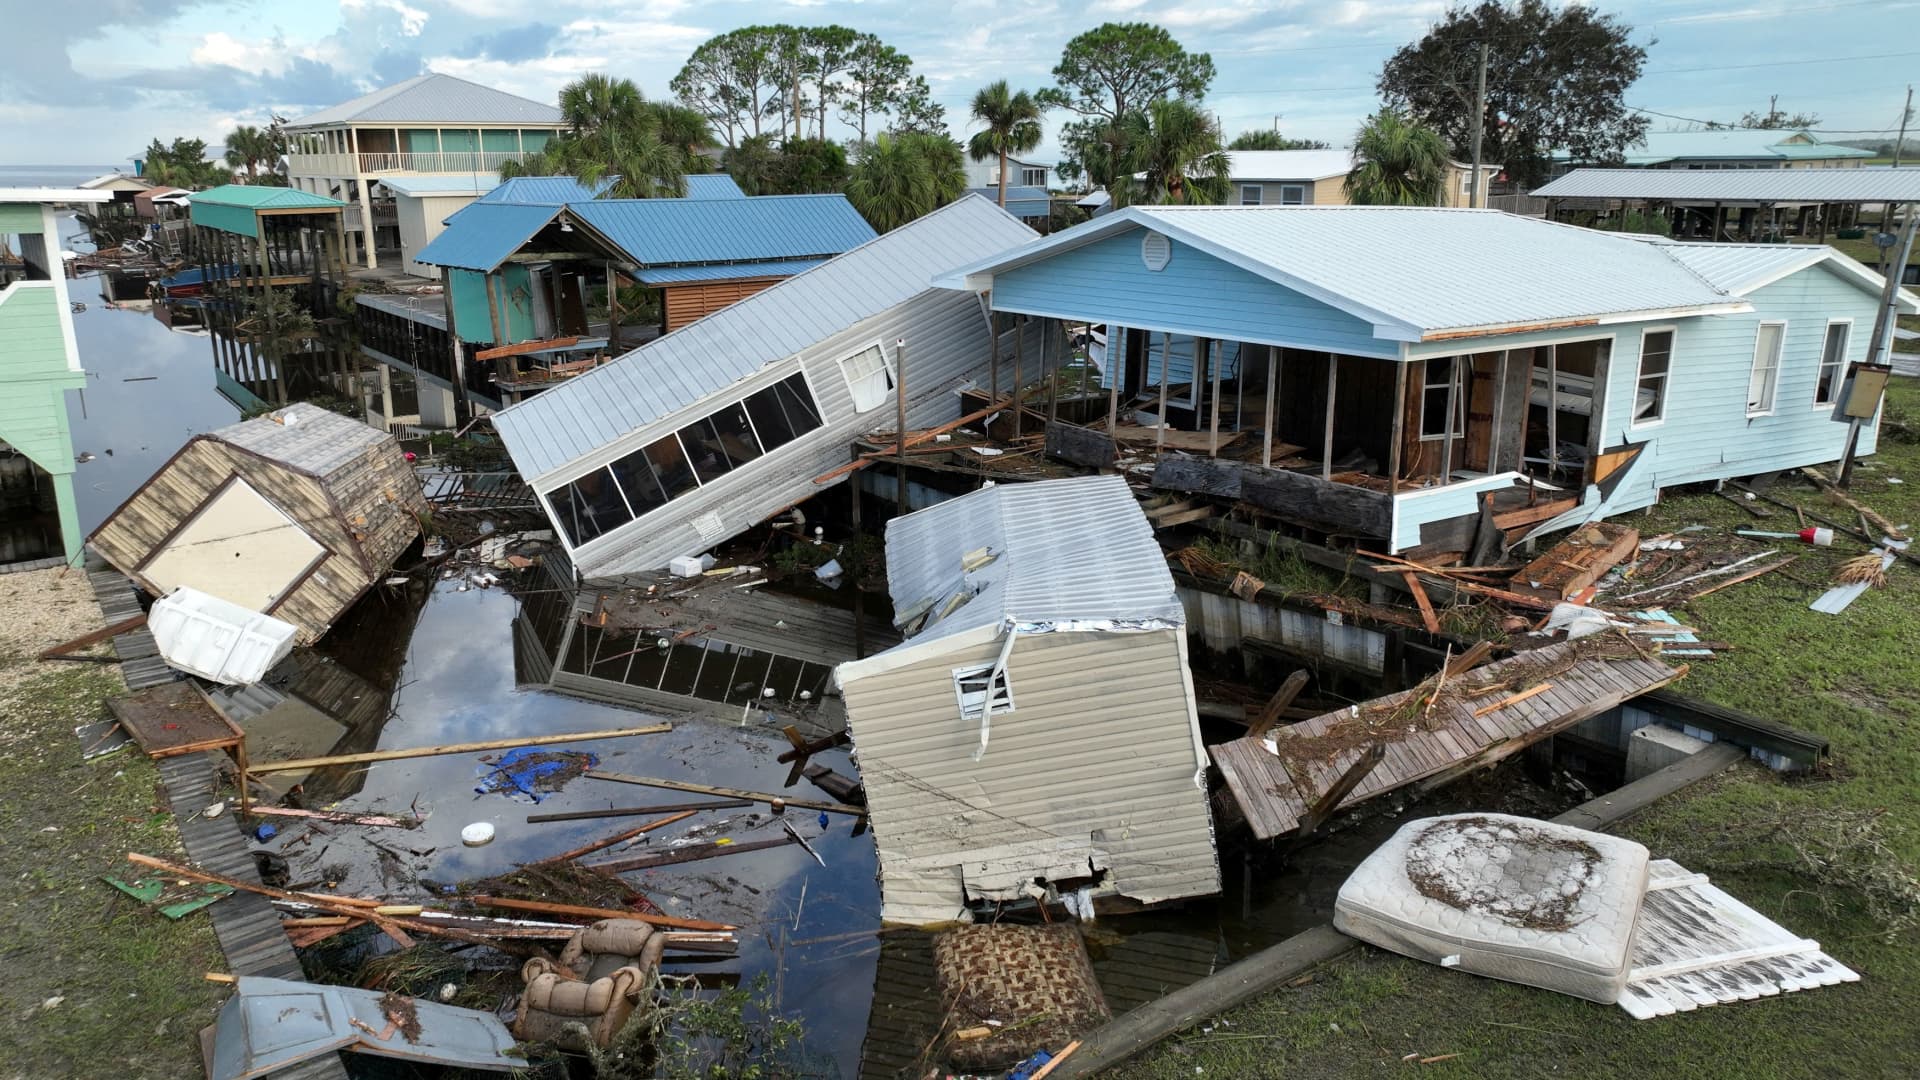 Biden in Florida promises to rebuild, calls on Congress to provide more FEMA funding